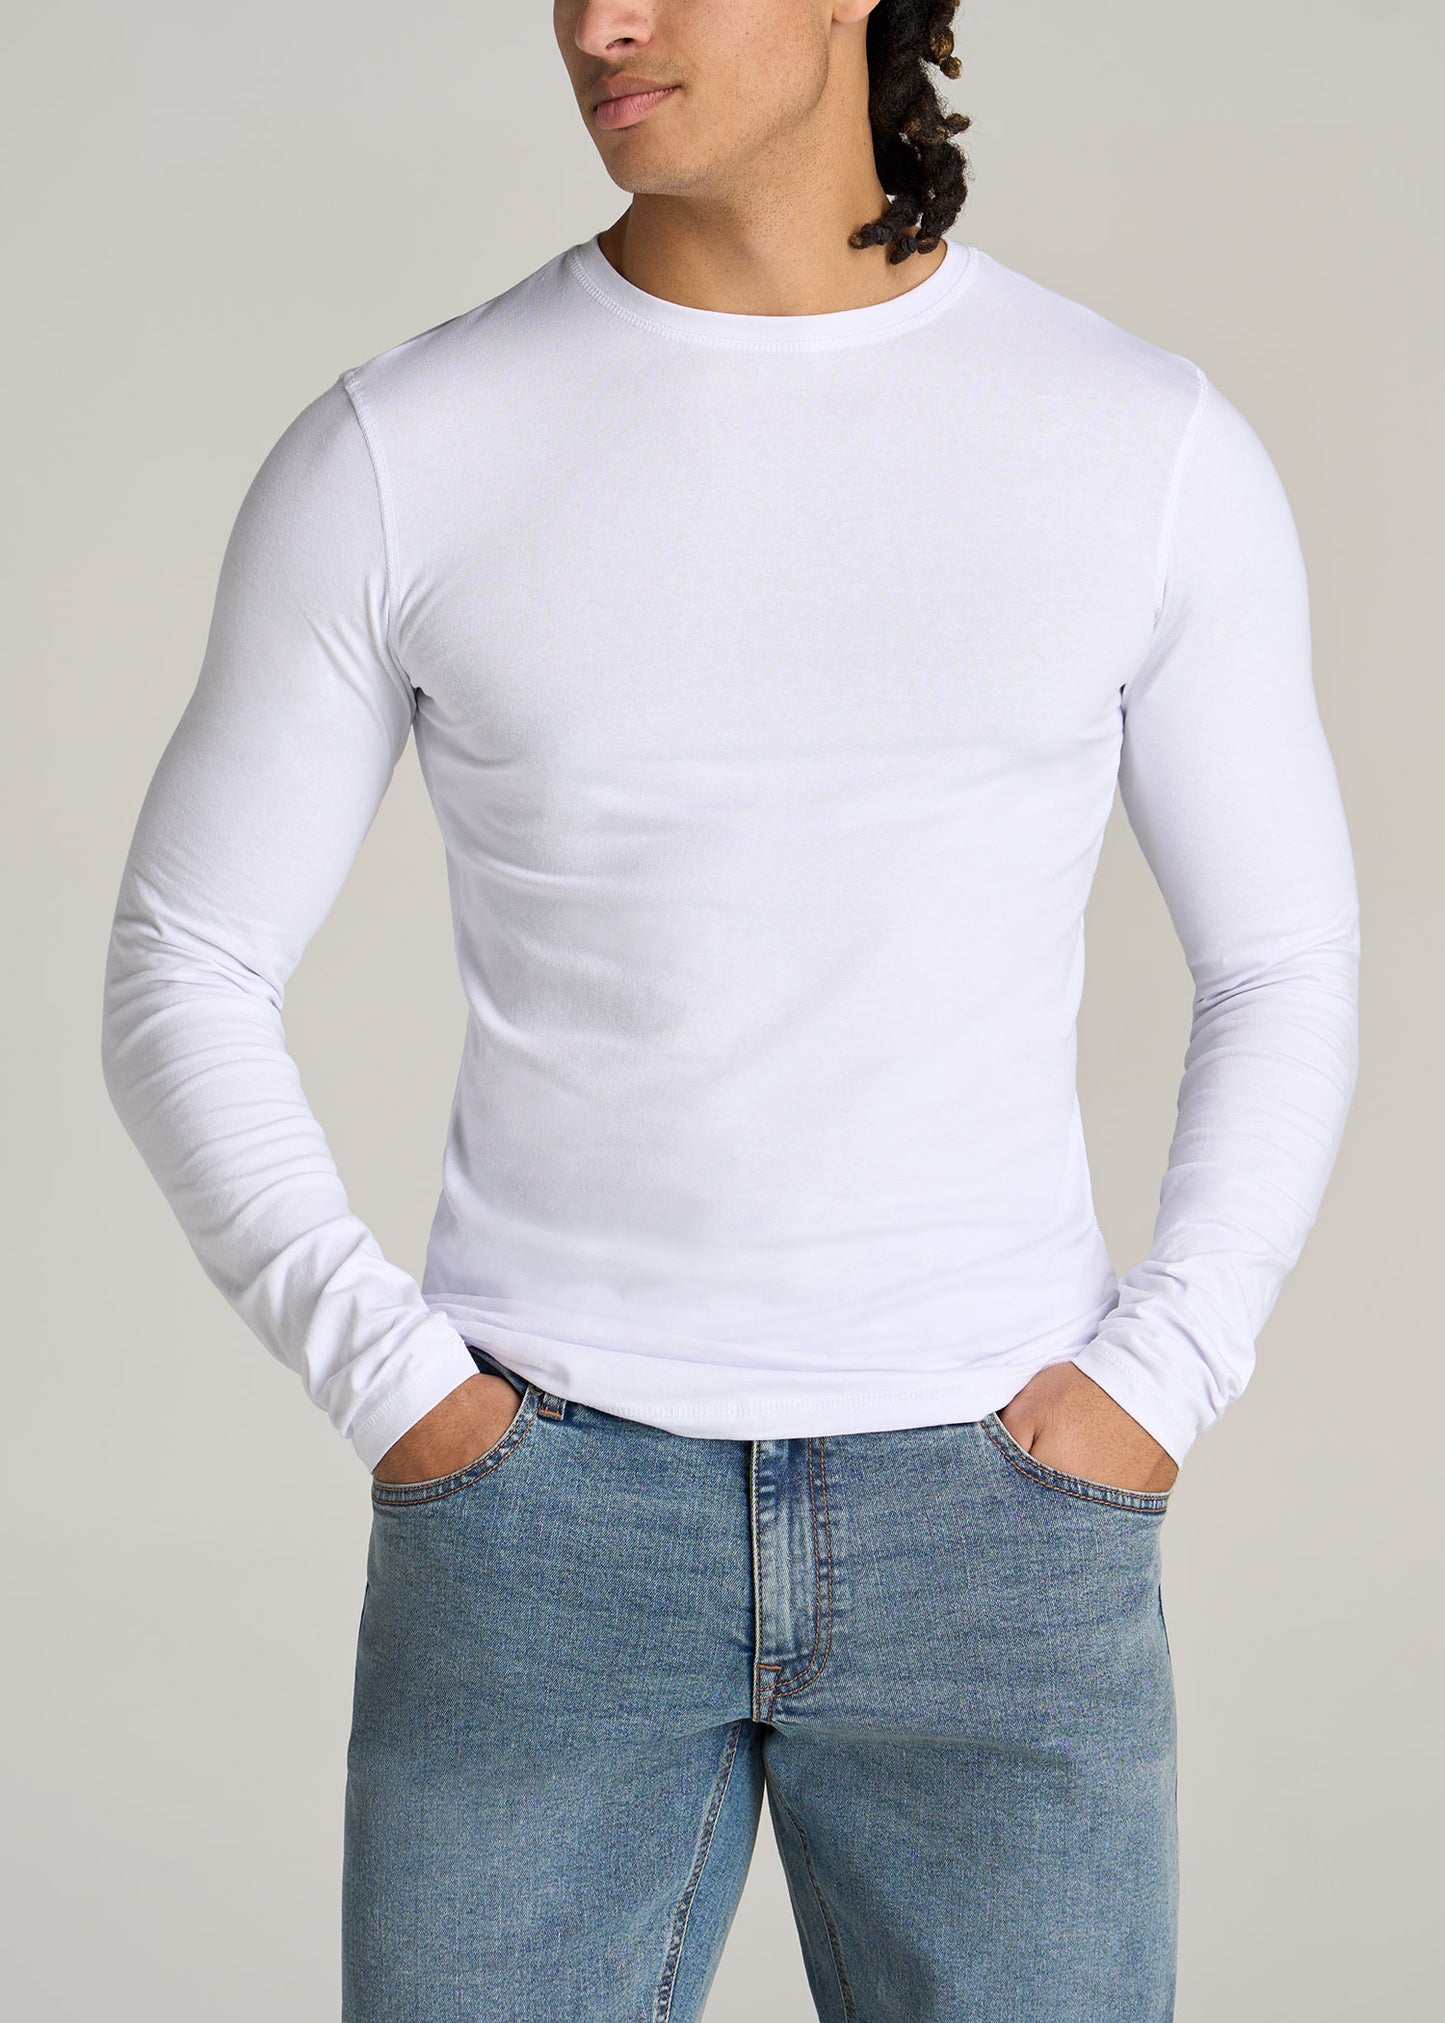 Men's Long-Sleeved T-Shirts